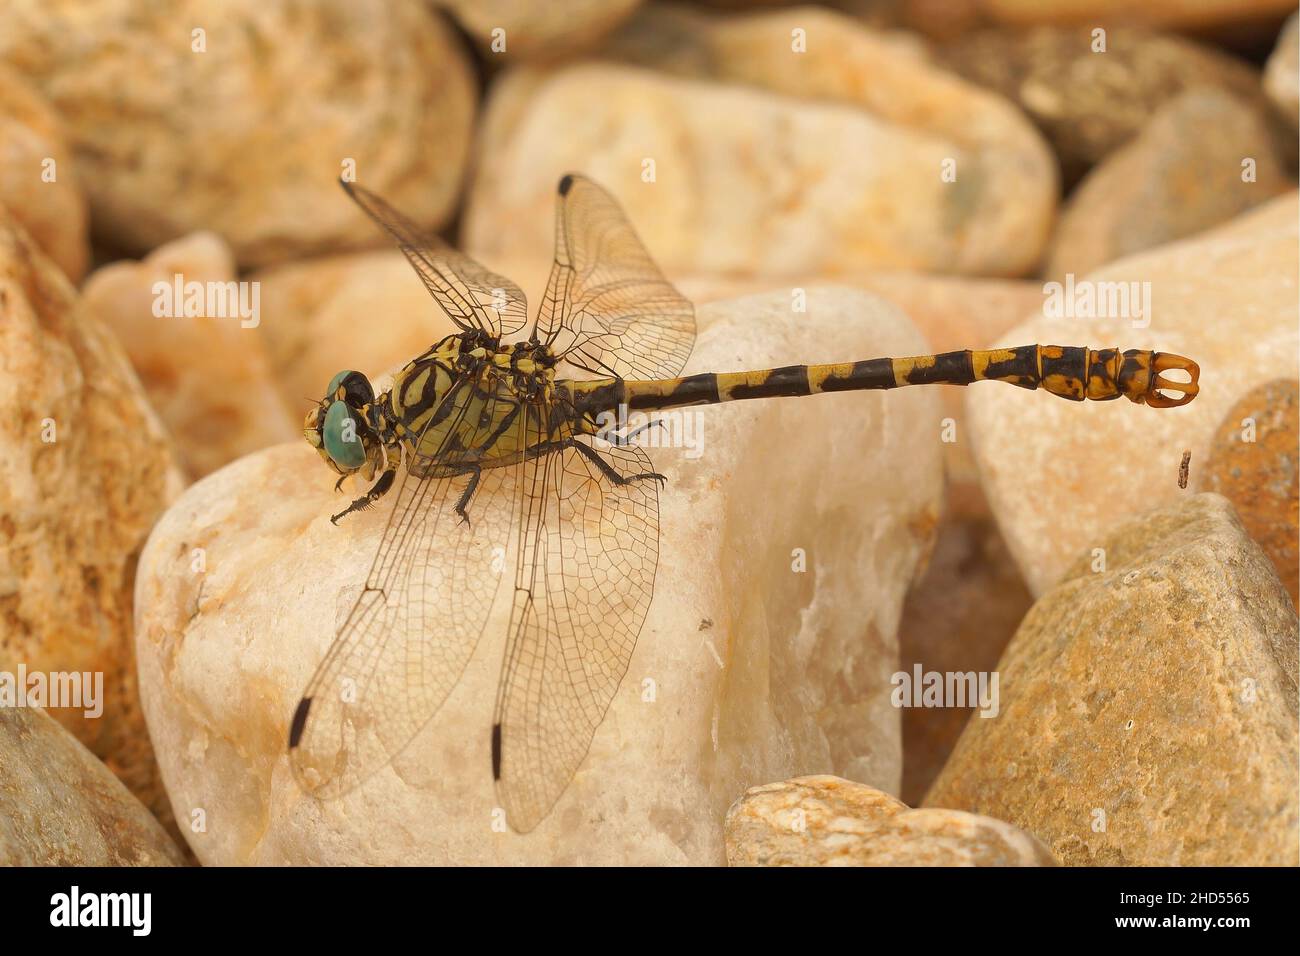 La libélula de ojos verdes, Onychogomphus forcpata Foto de stock